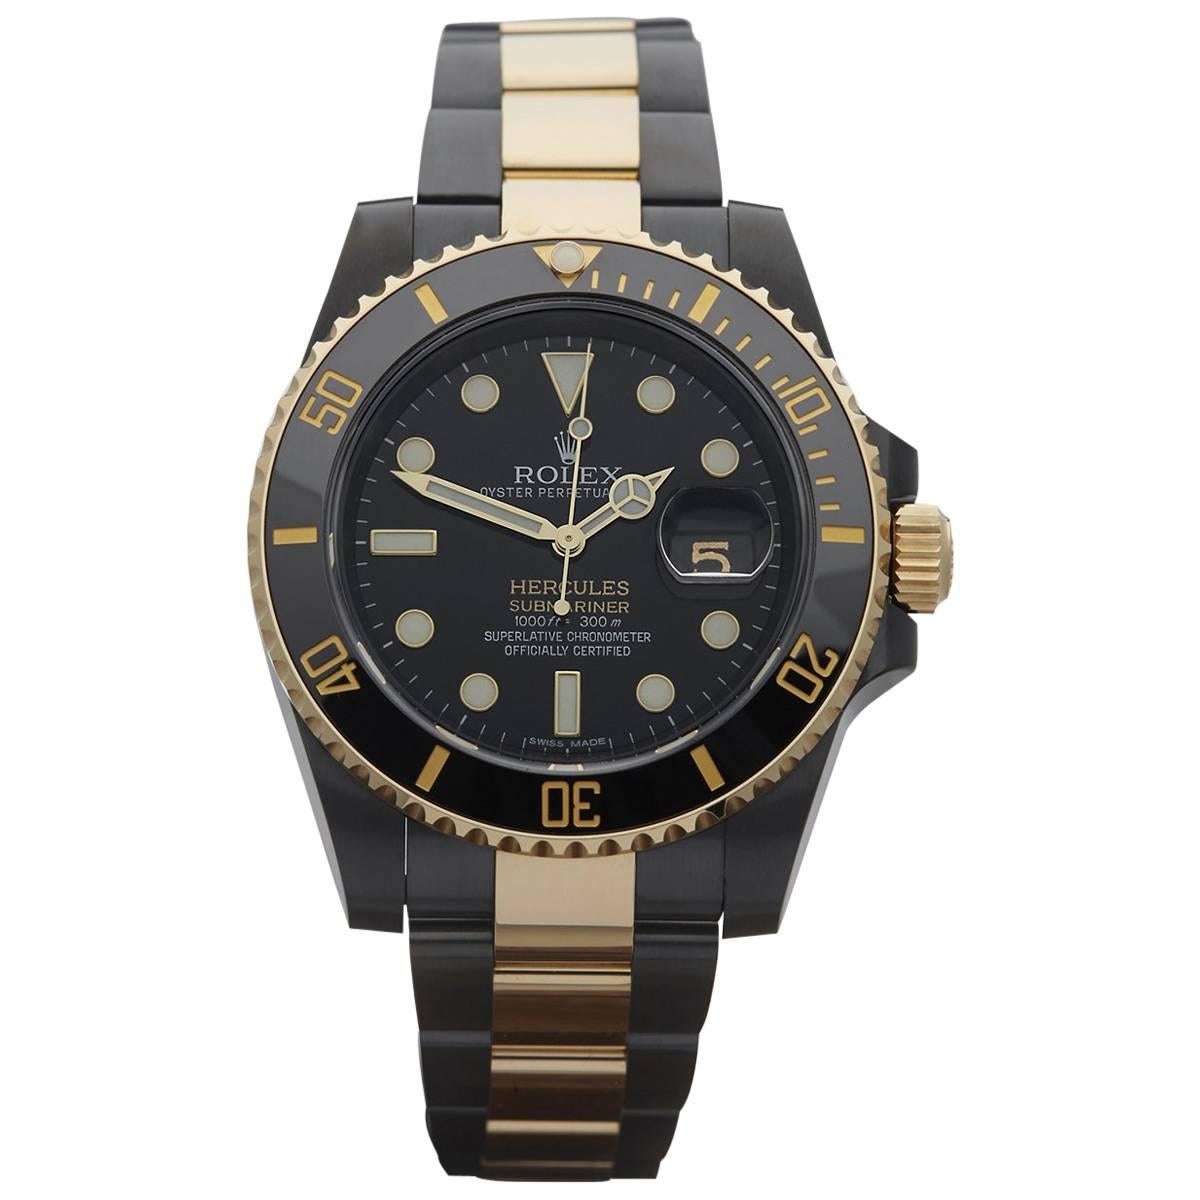  Rolex Custom Gold Steel DLC Coated Submariner Hercules Automatic Wristwatch